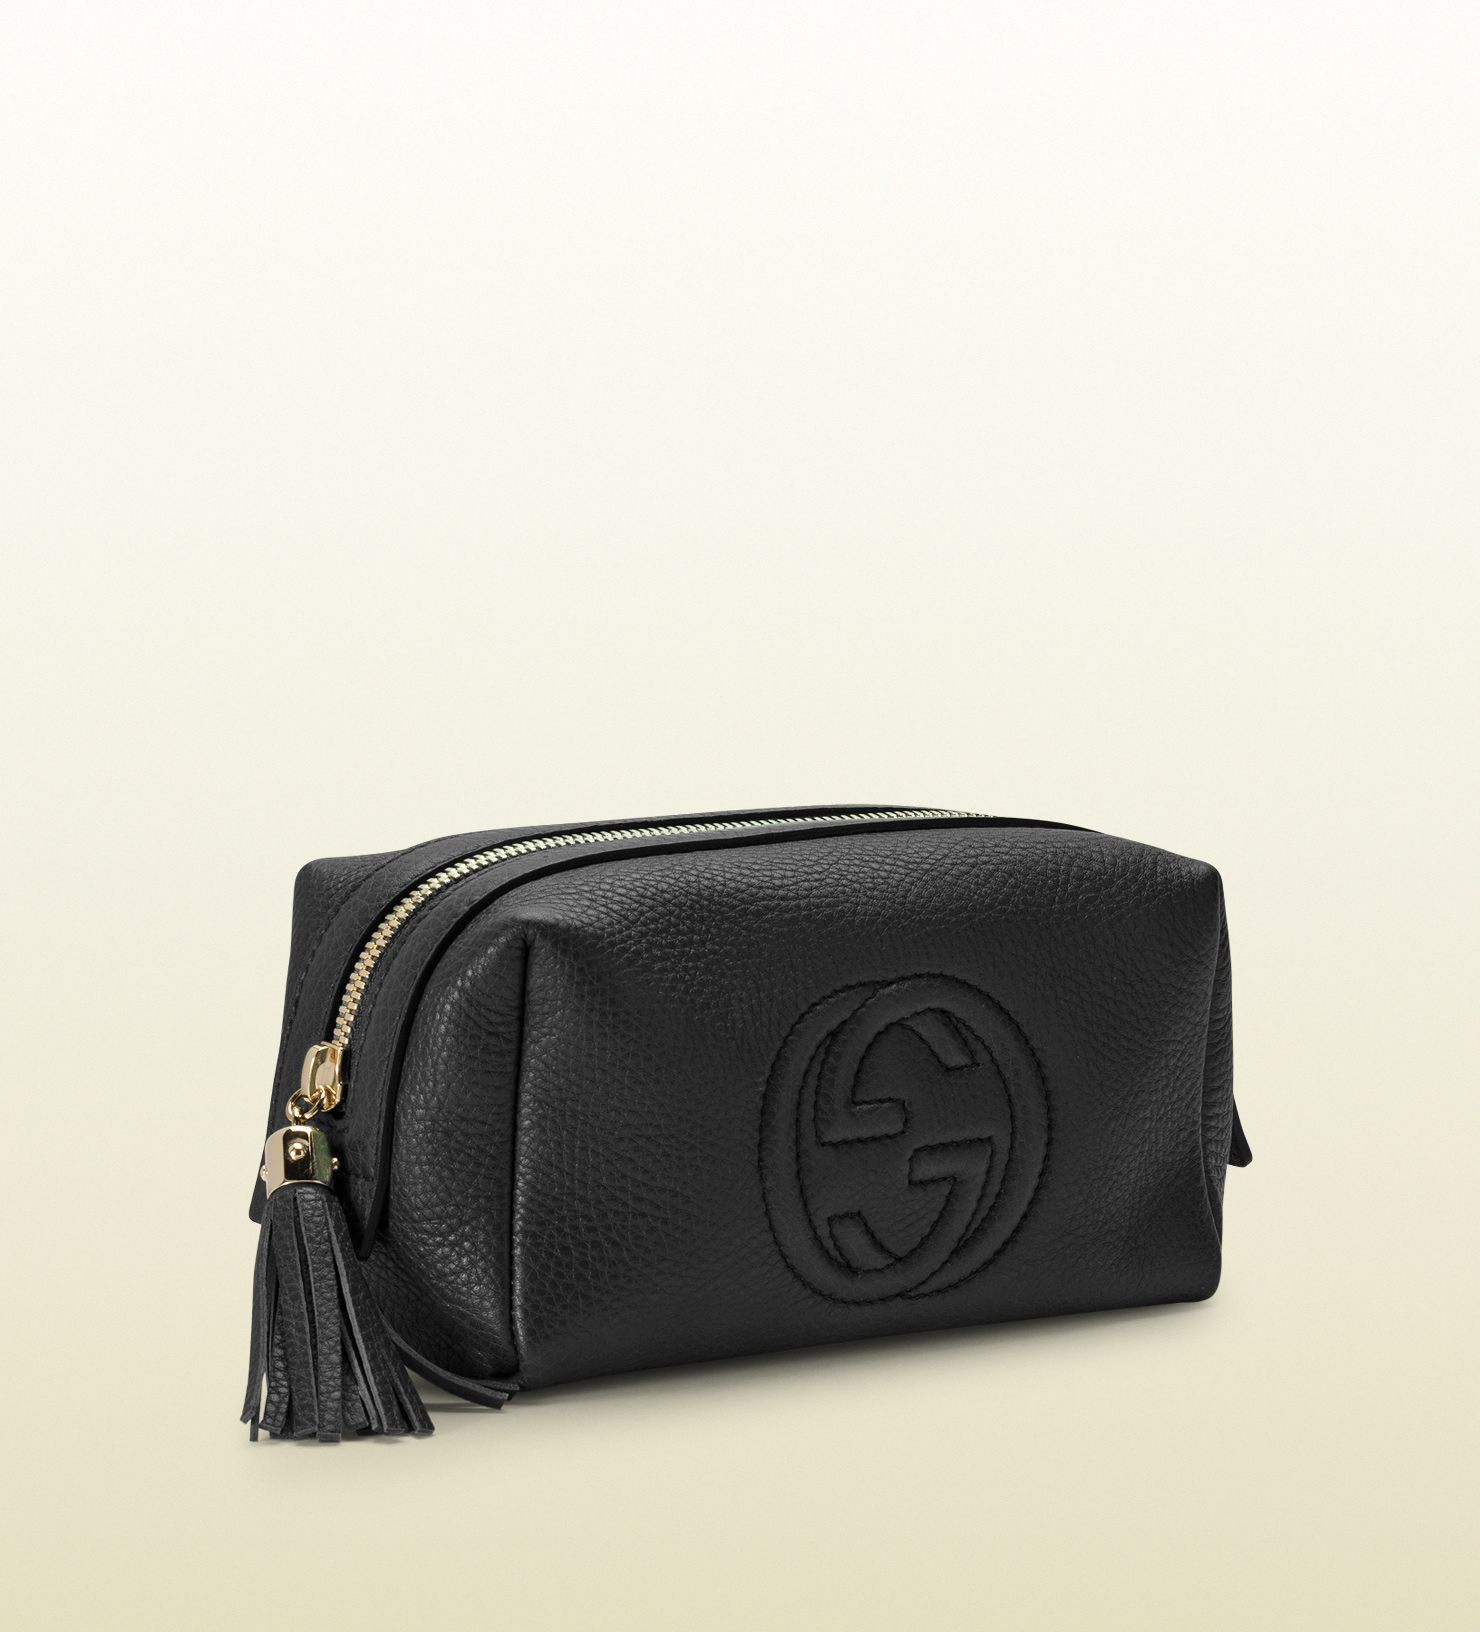 Gucci Soho Medium Leather Cosmetic Case in Black